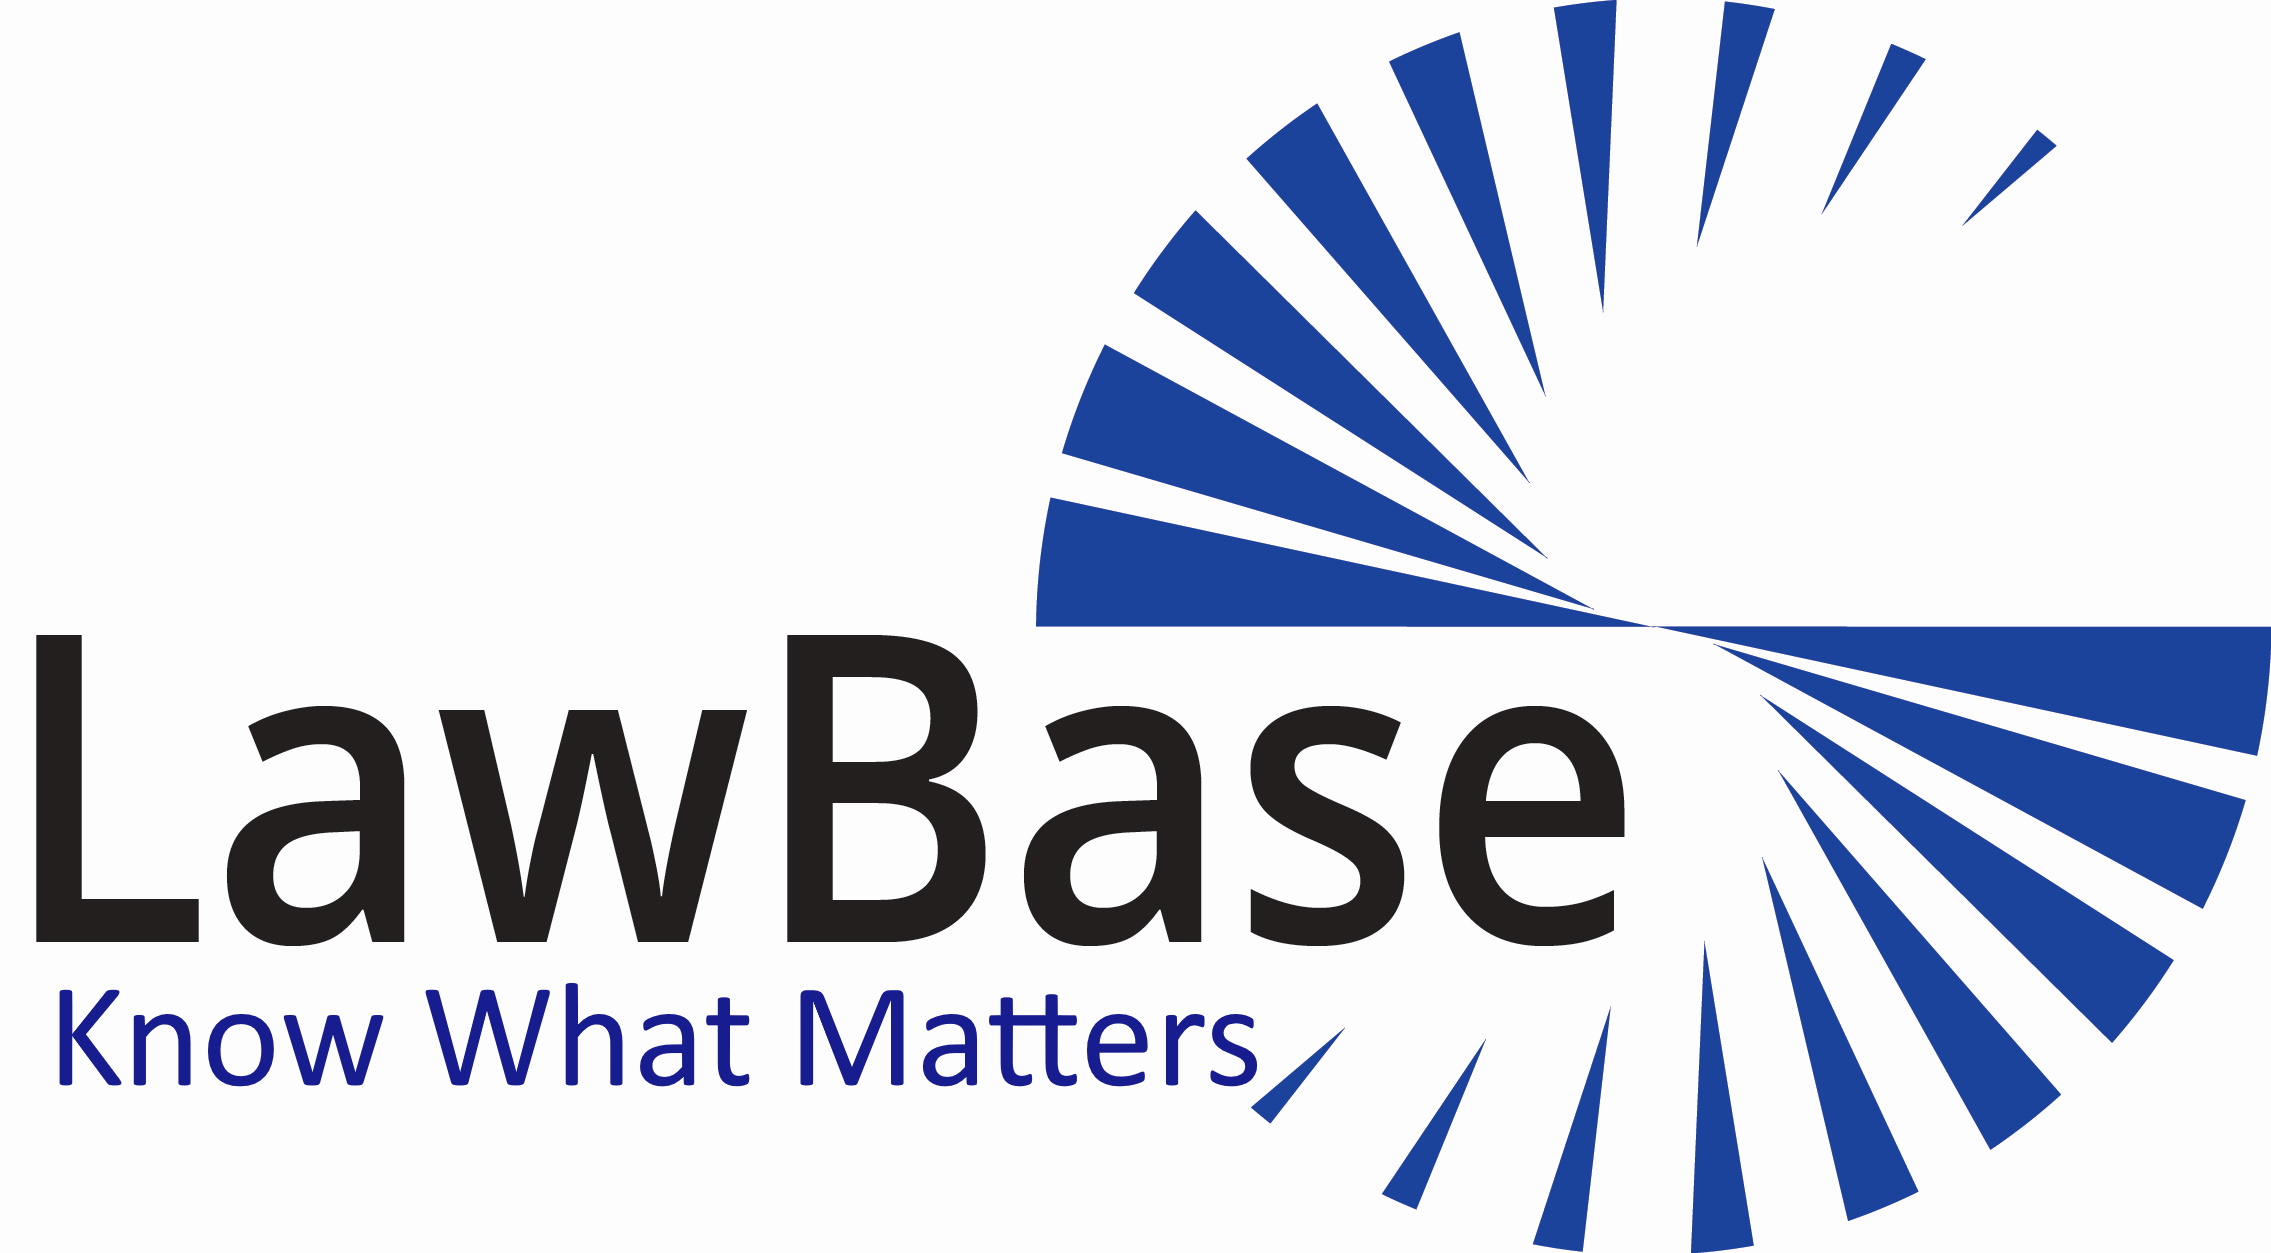 LawBase